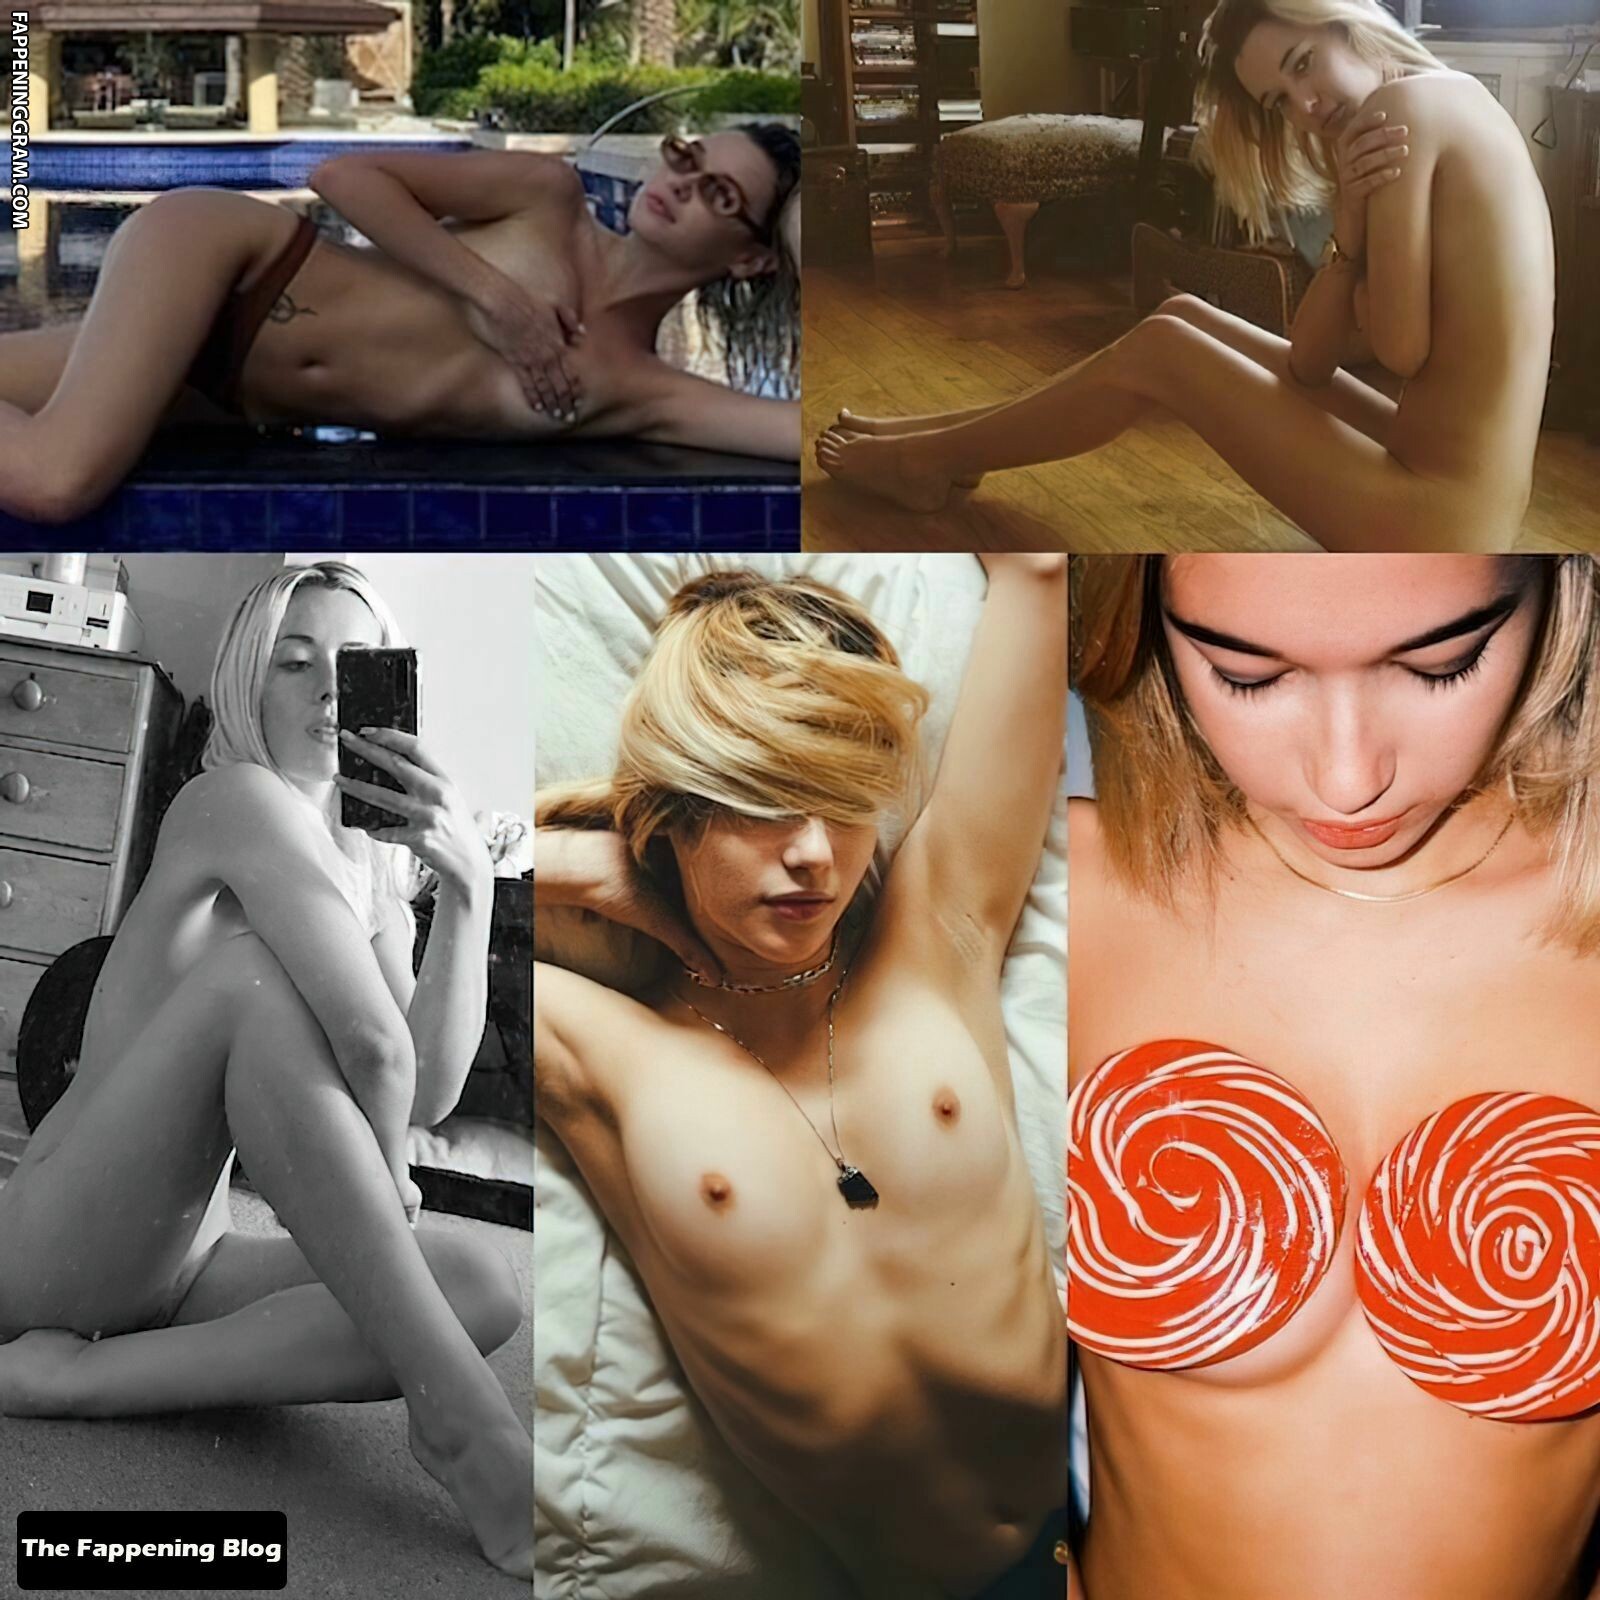 Ana snyder - nude photos